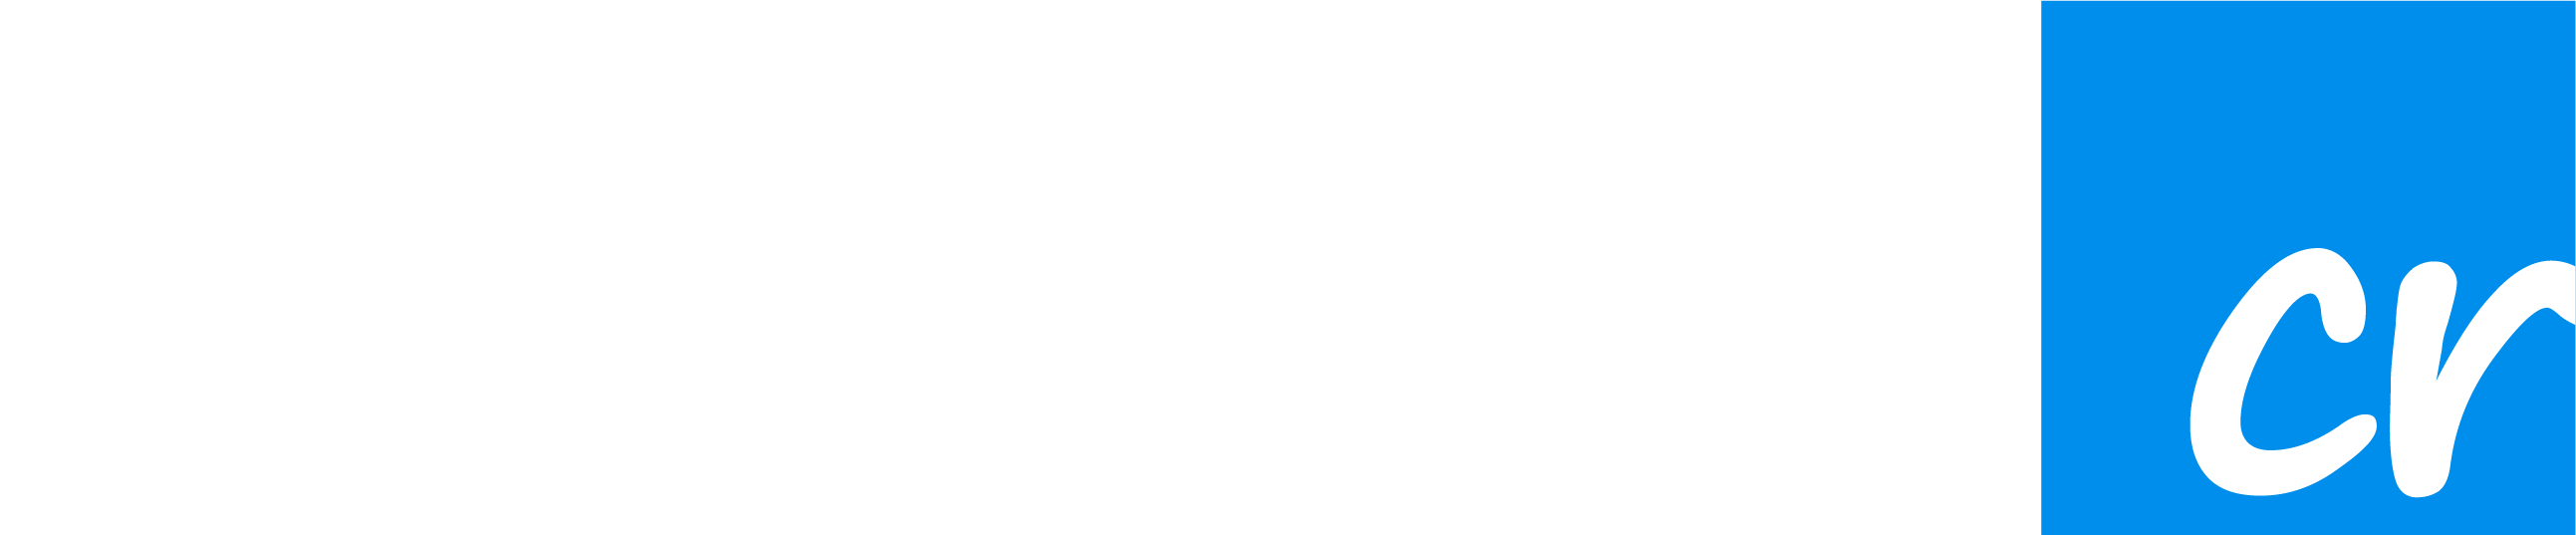 Crelate_Logo-white@4x-1